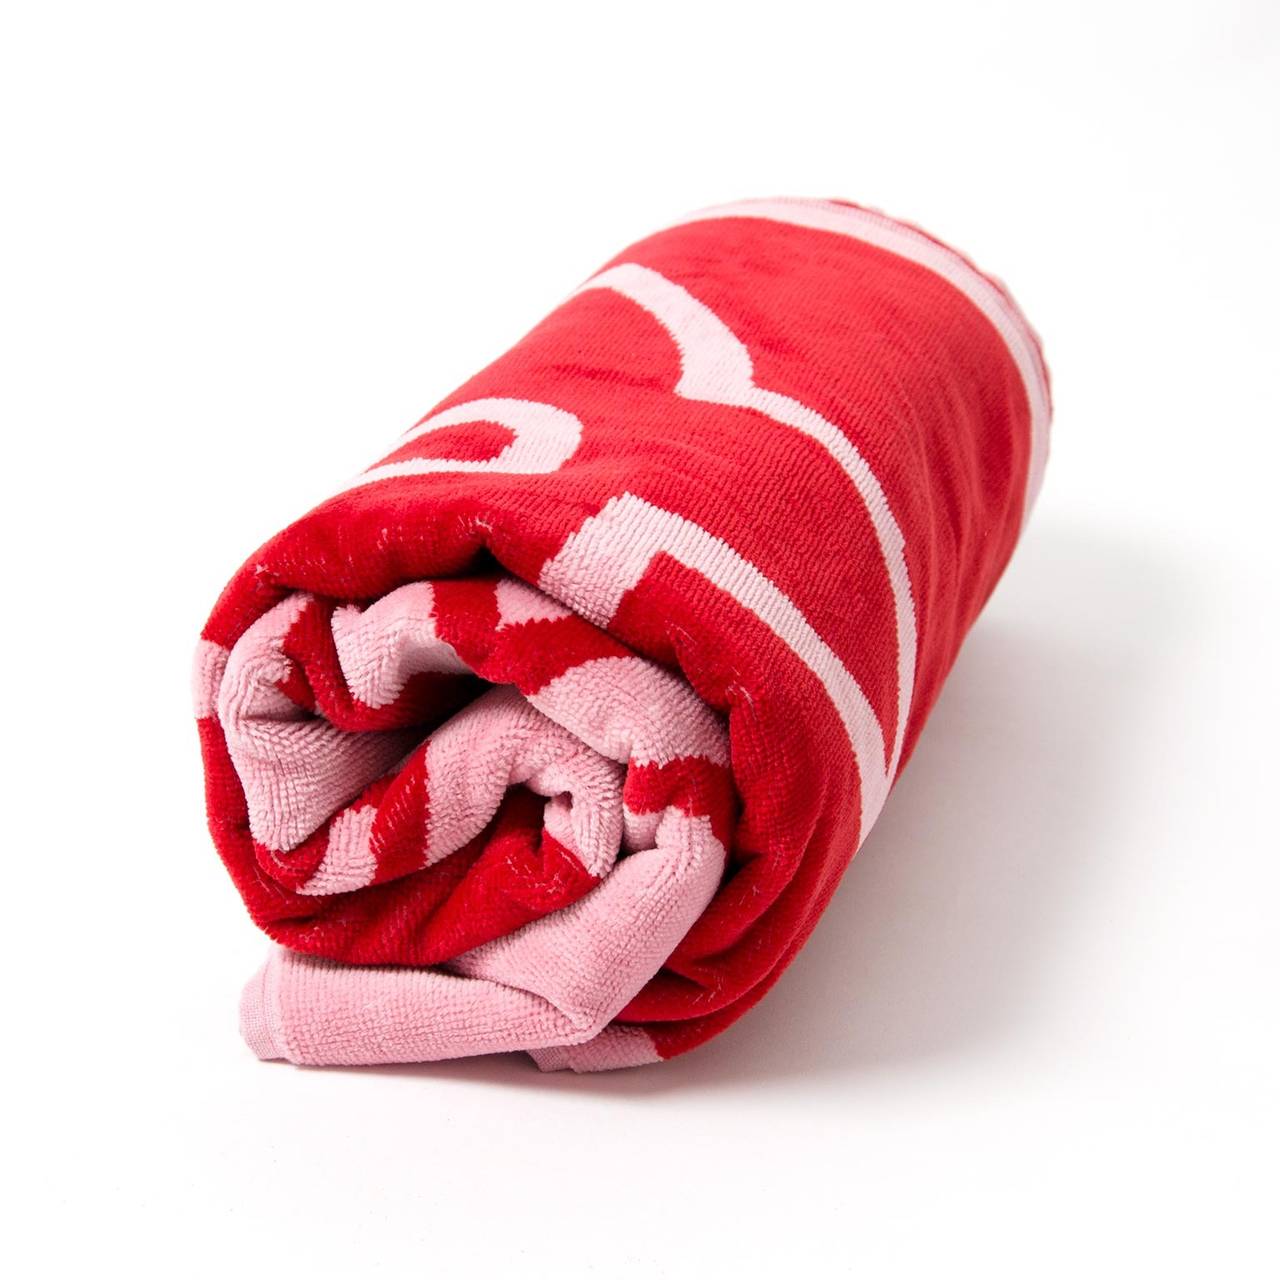 Louis Vuitton Red Pink Monogram Beach Towel at 1stdibs